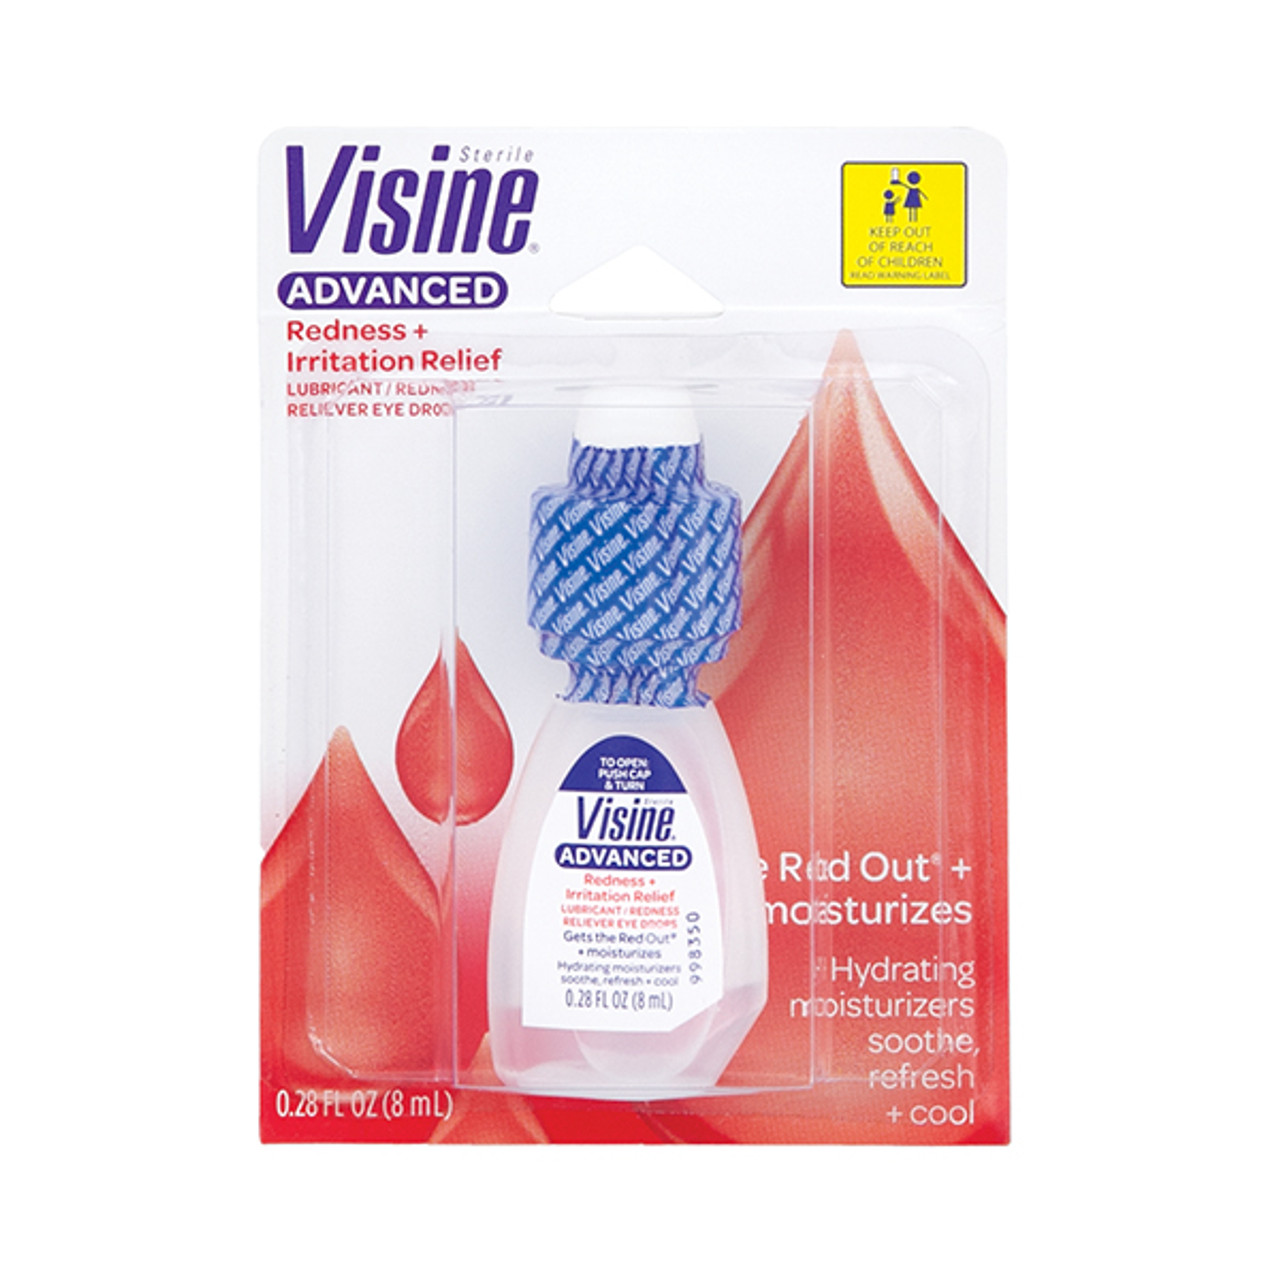 Visine Advanced Relief Redness Reliever Eye Drops, 0.28 oz